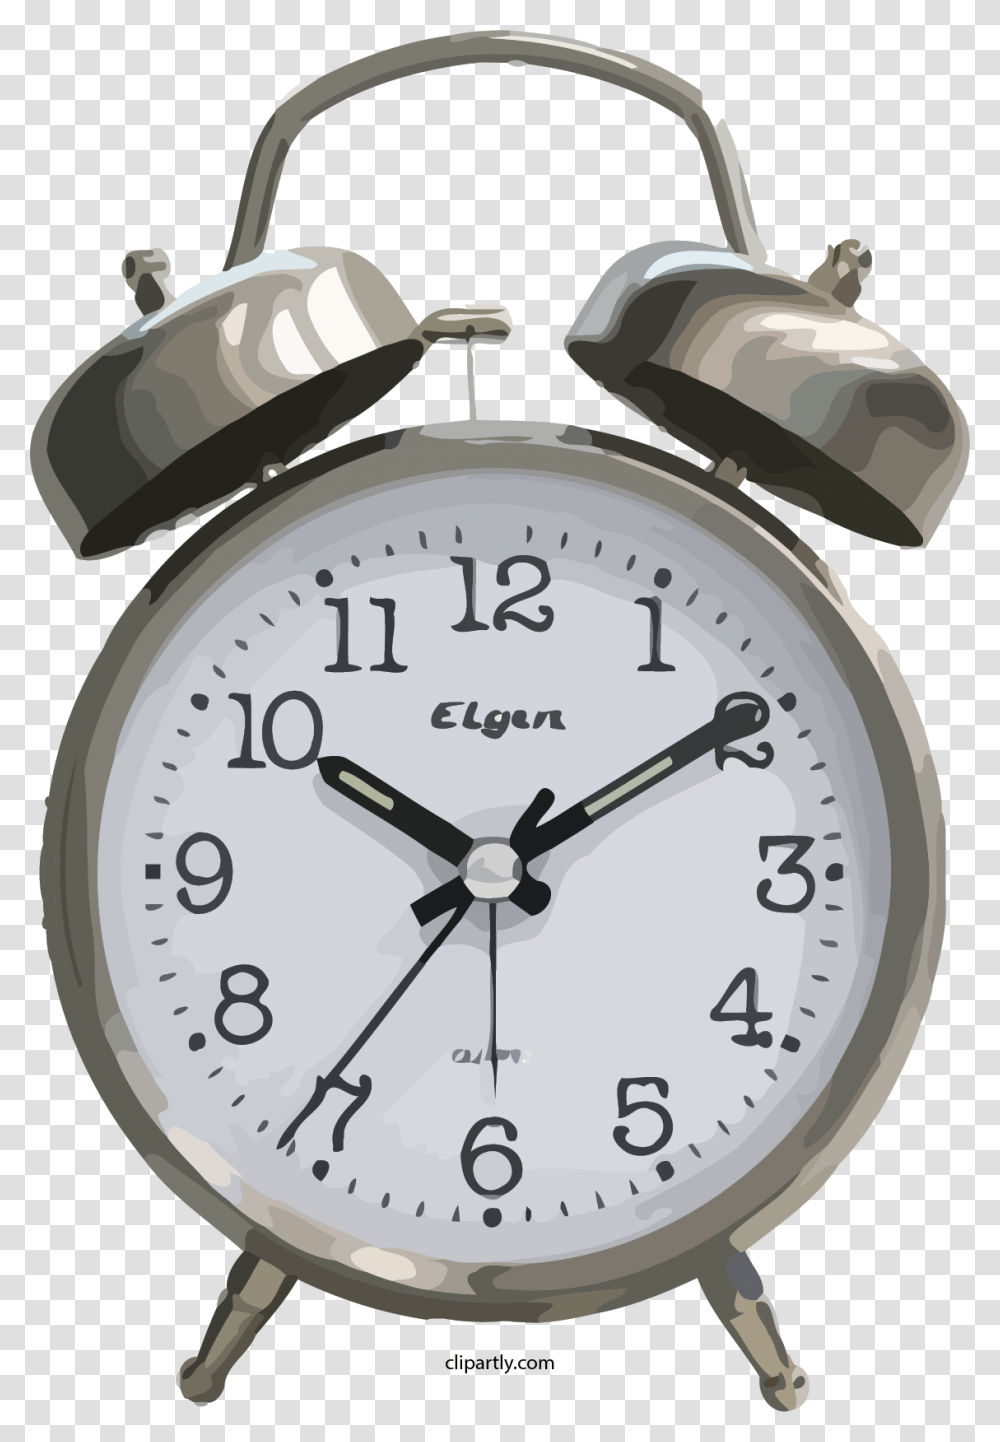 Elgen Old Clock Clipart Alarm Clock Bell, Clock Tower, Architecture, Building, Analog Clock Transparent Png